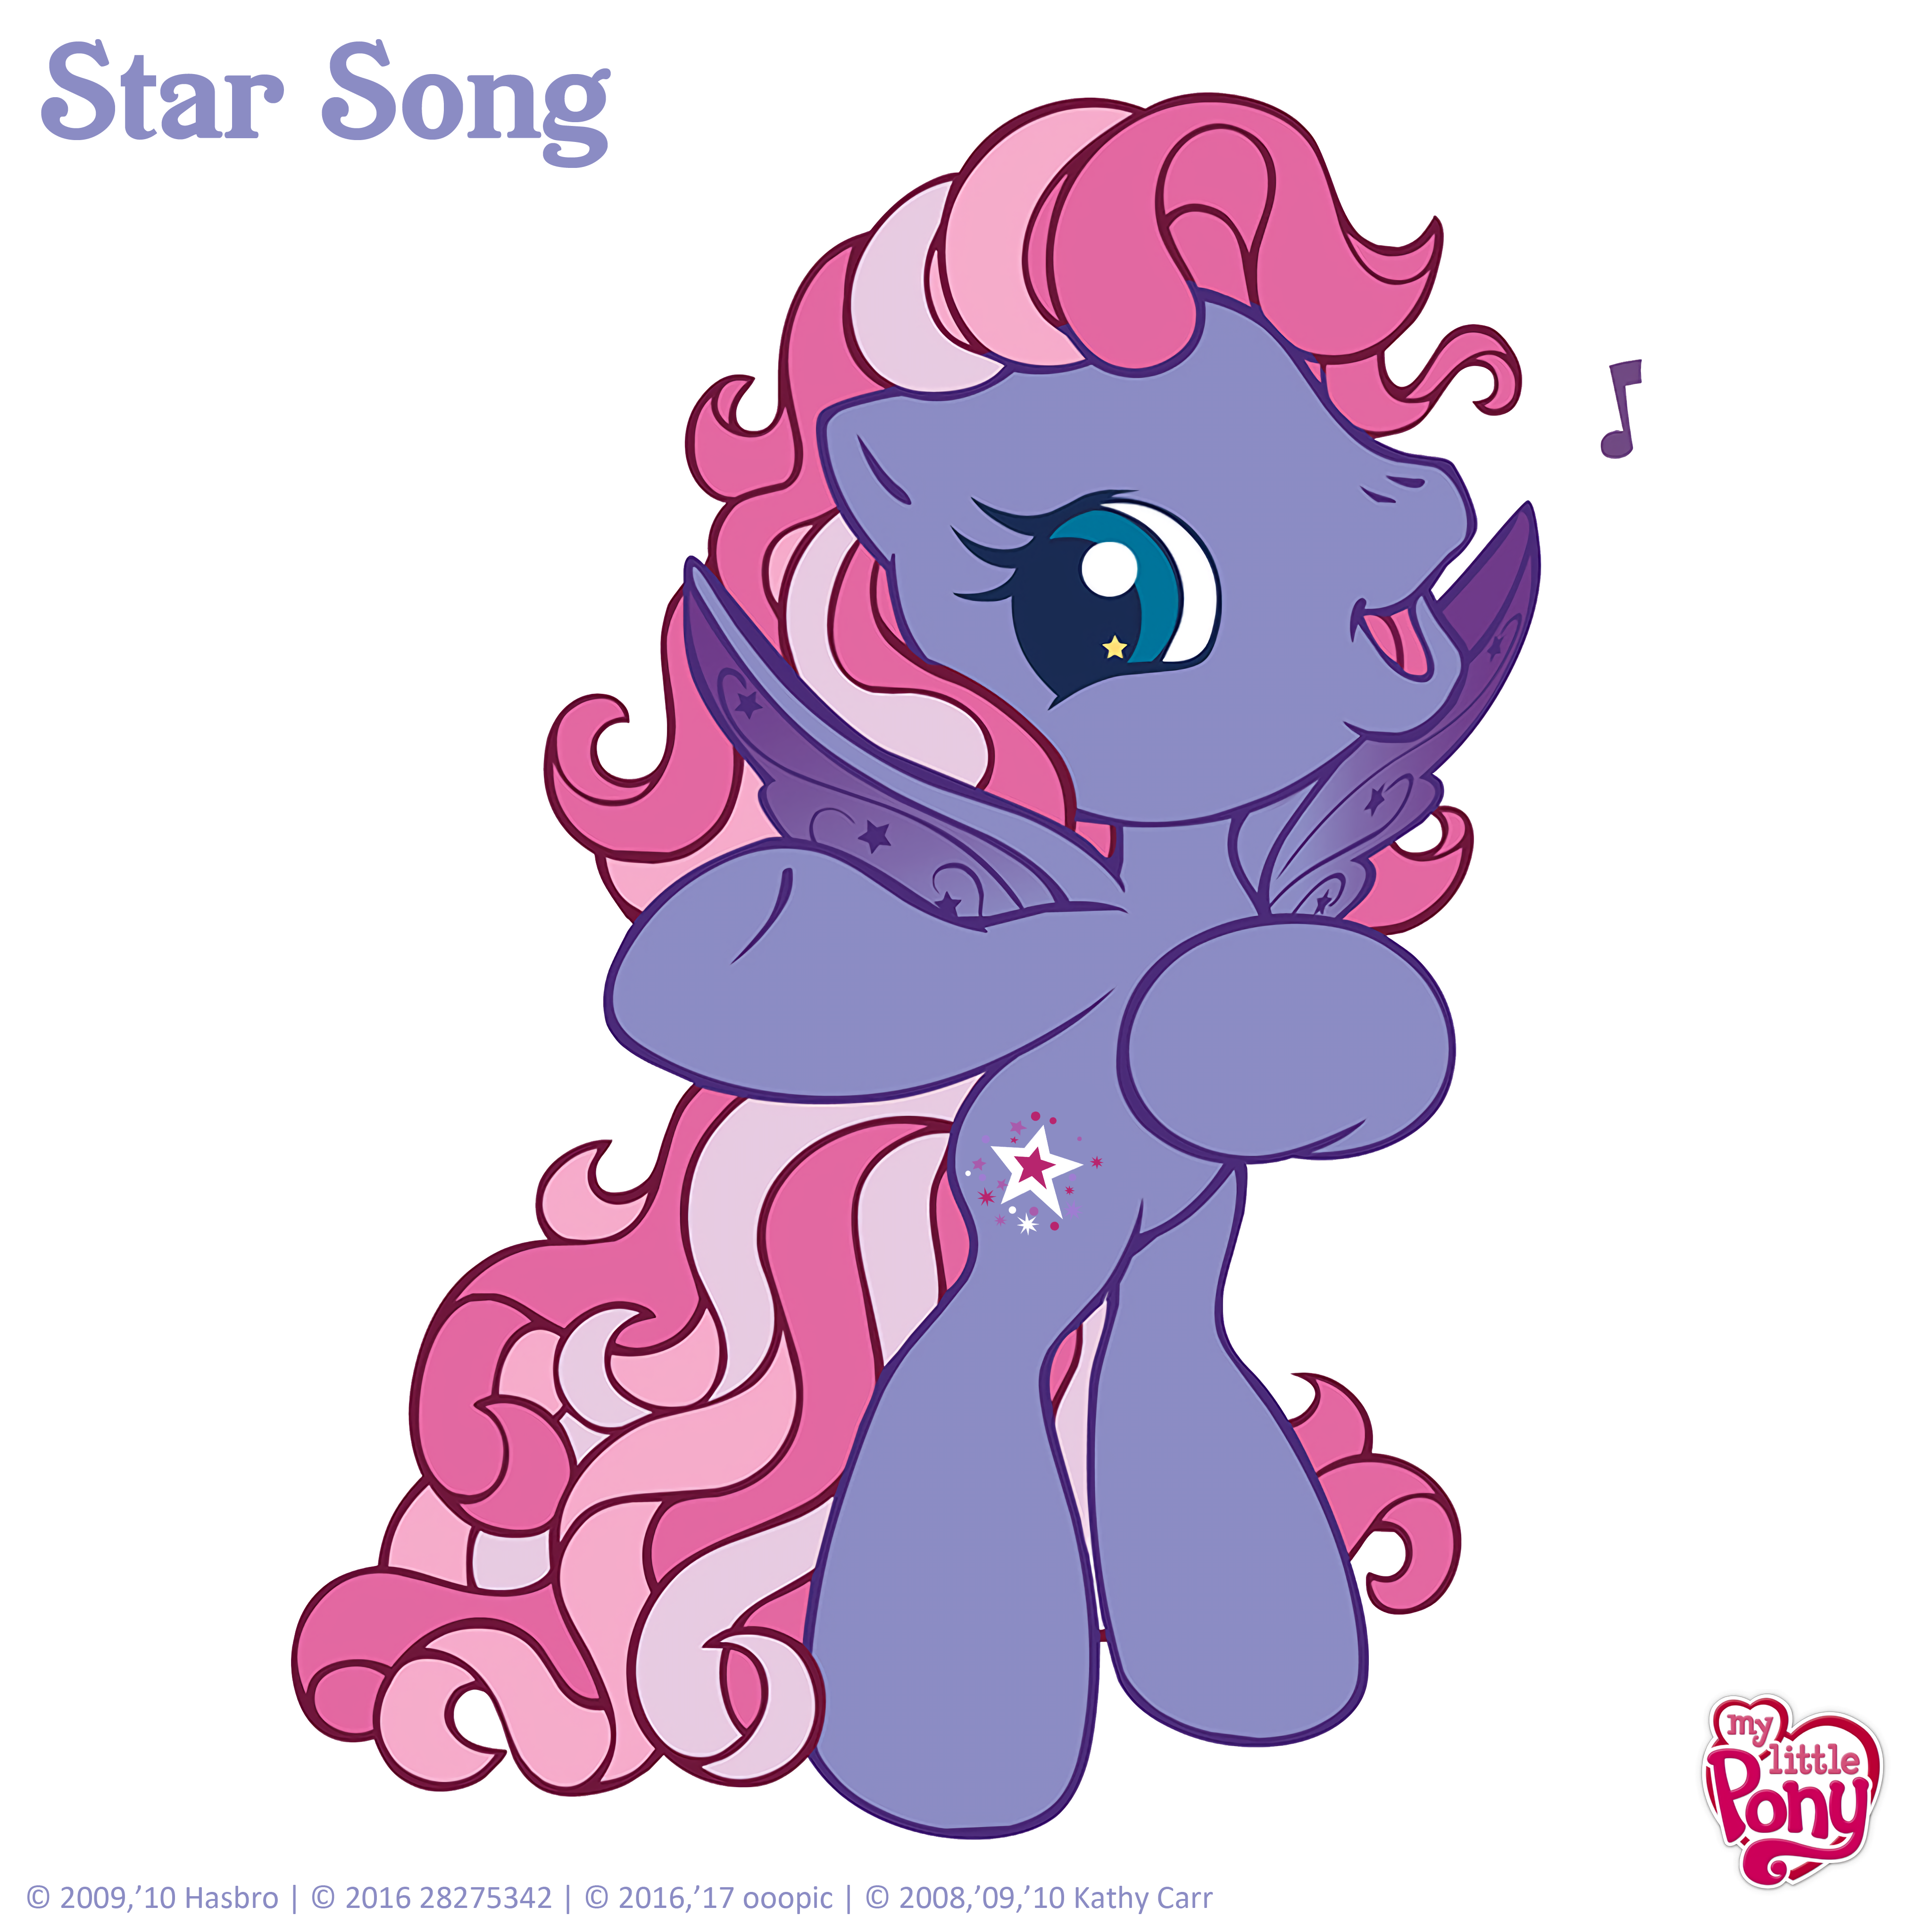 Star pony. Starsong g3. My little Pony g3 Пинки. Старсонг пони g3. My little Pony Starsong.